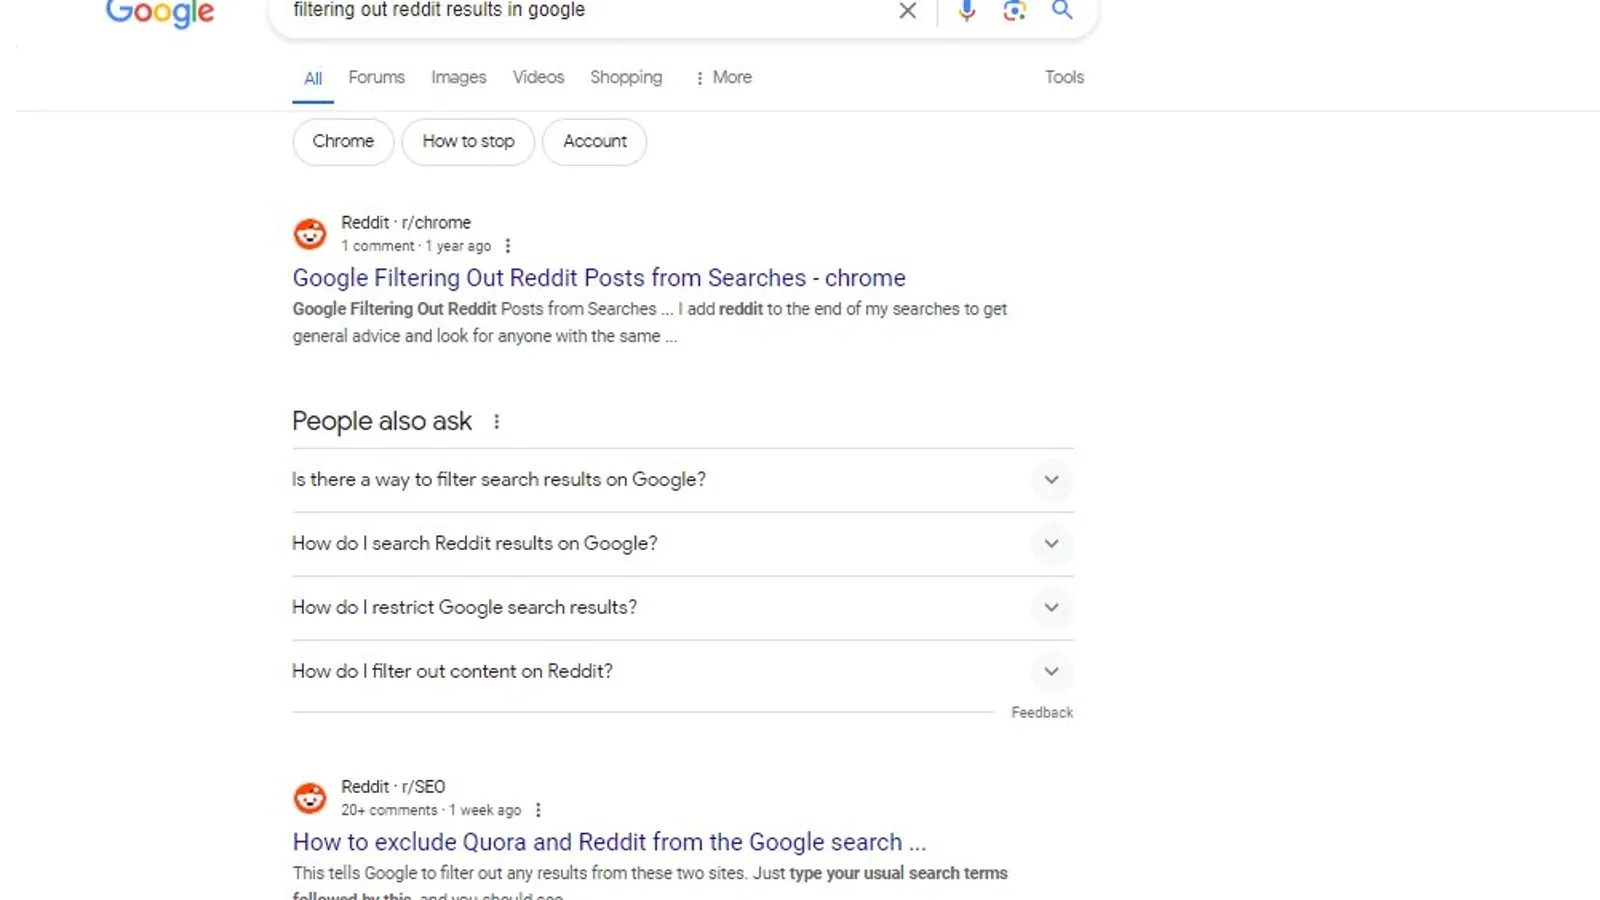 Filtering out reddit results in Google